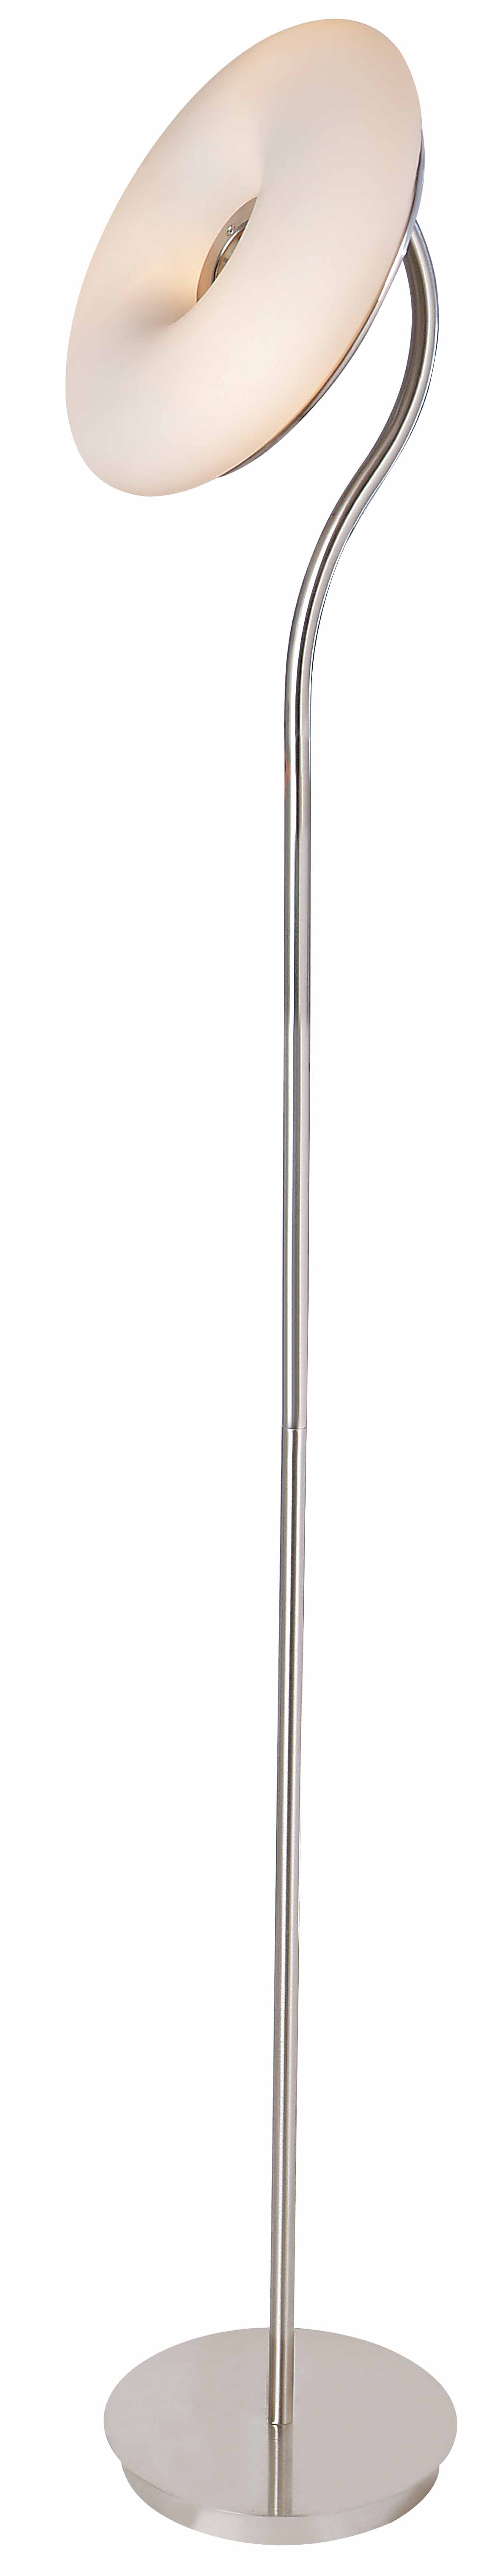 Línea moderna lámparas de vector de cristal (MT8709SA-GBH) de Glod del sitio